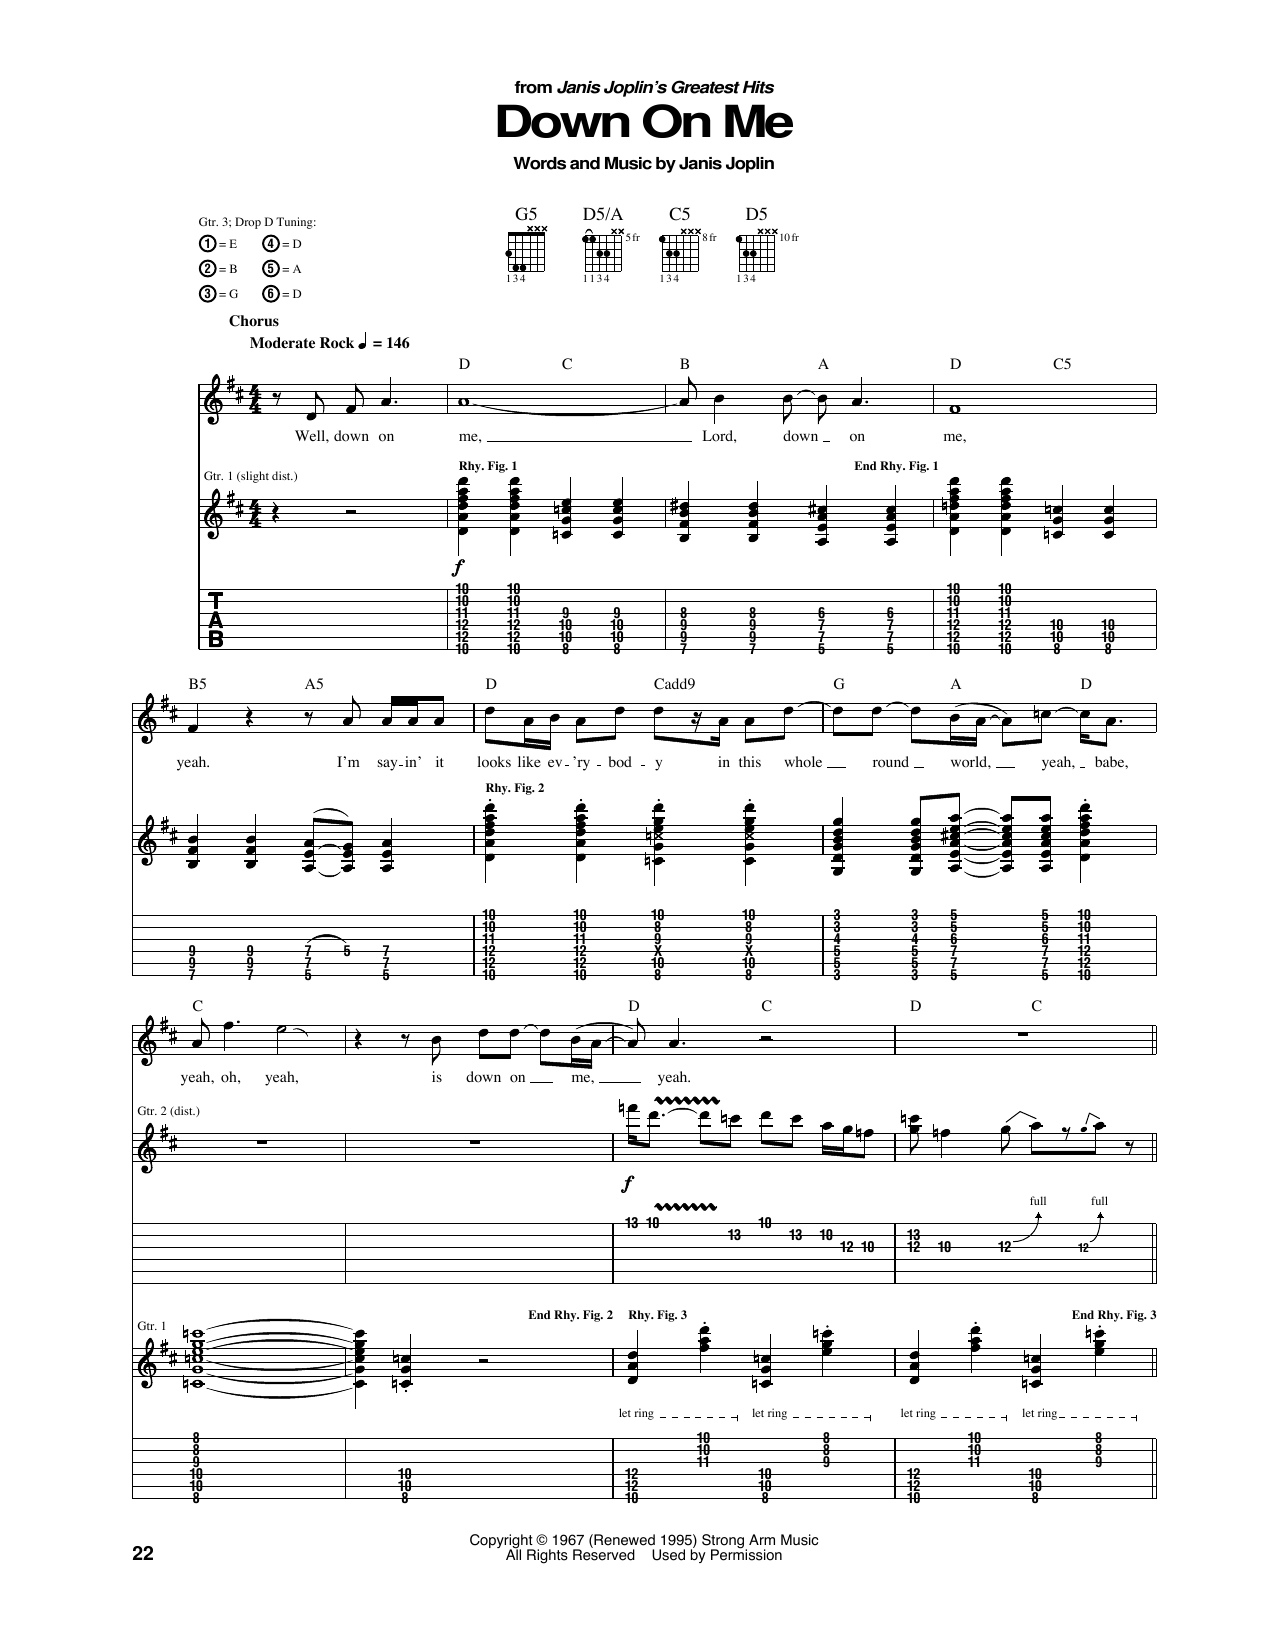 Janis Joplin Down On Me Sheet Music Notes & Chords for Guitar Tab - Download or Print PDF